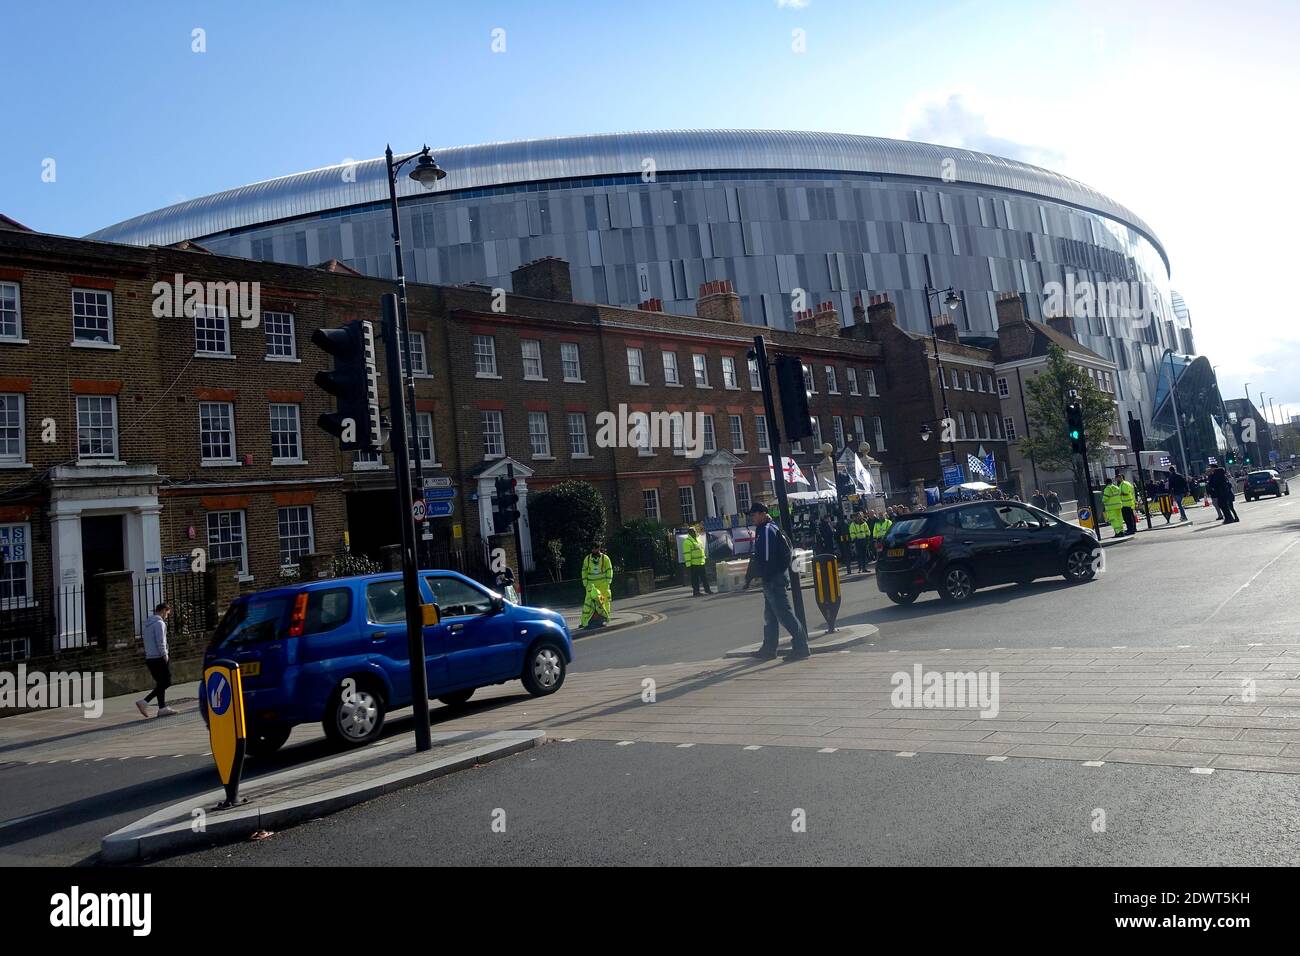 Tottenham Hotspur , White Hart Lane Stadium, London, England. Stockfoto